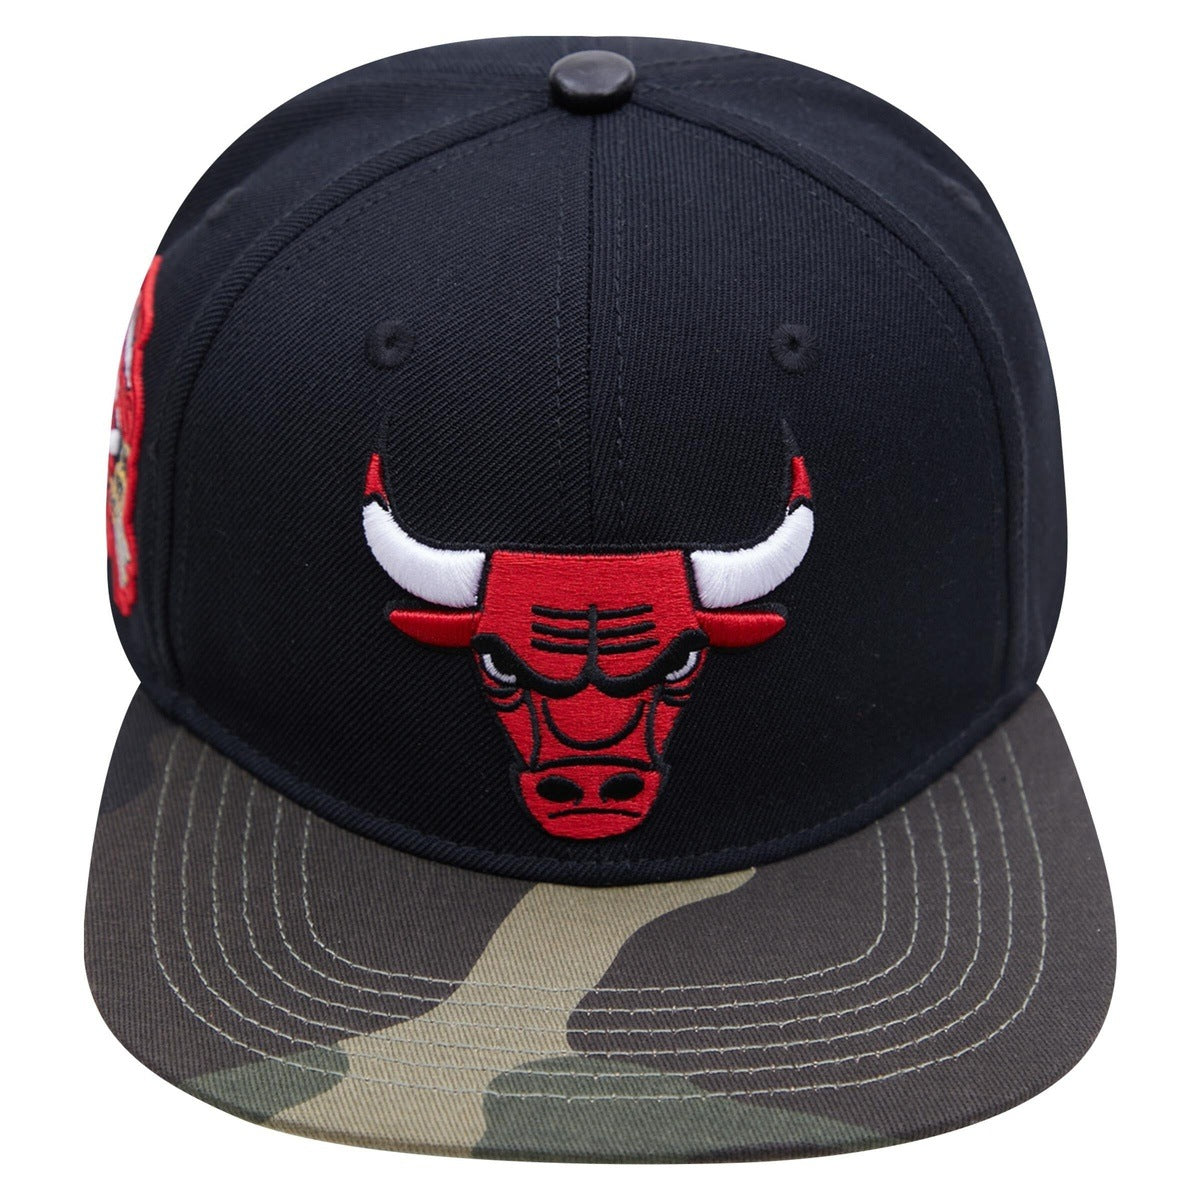 pro standard Chicago Bulls Jogger set red – Premium Apparel Shops